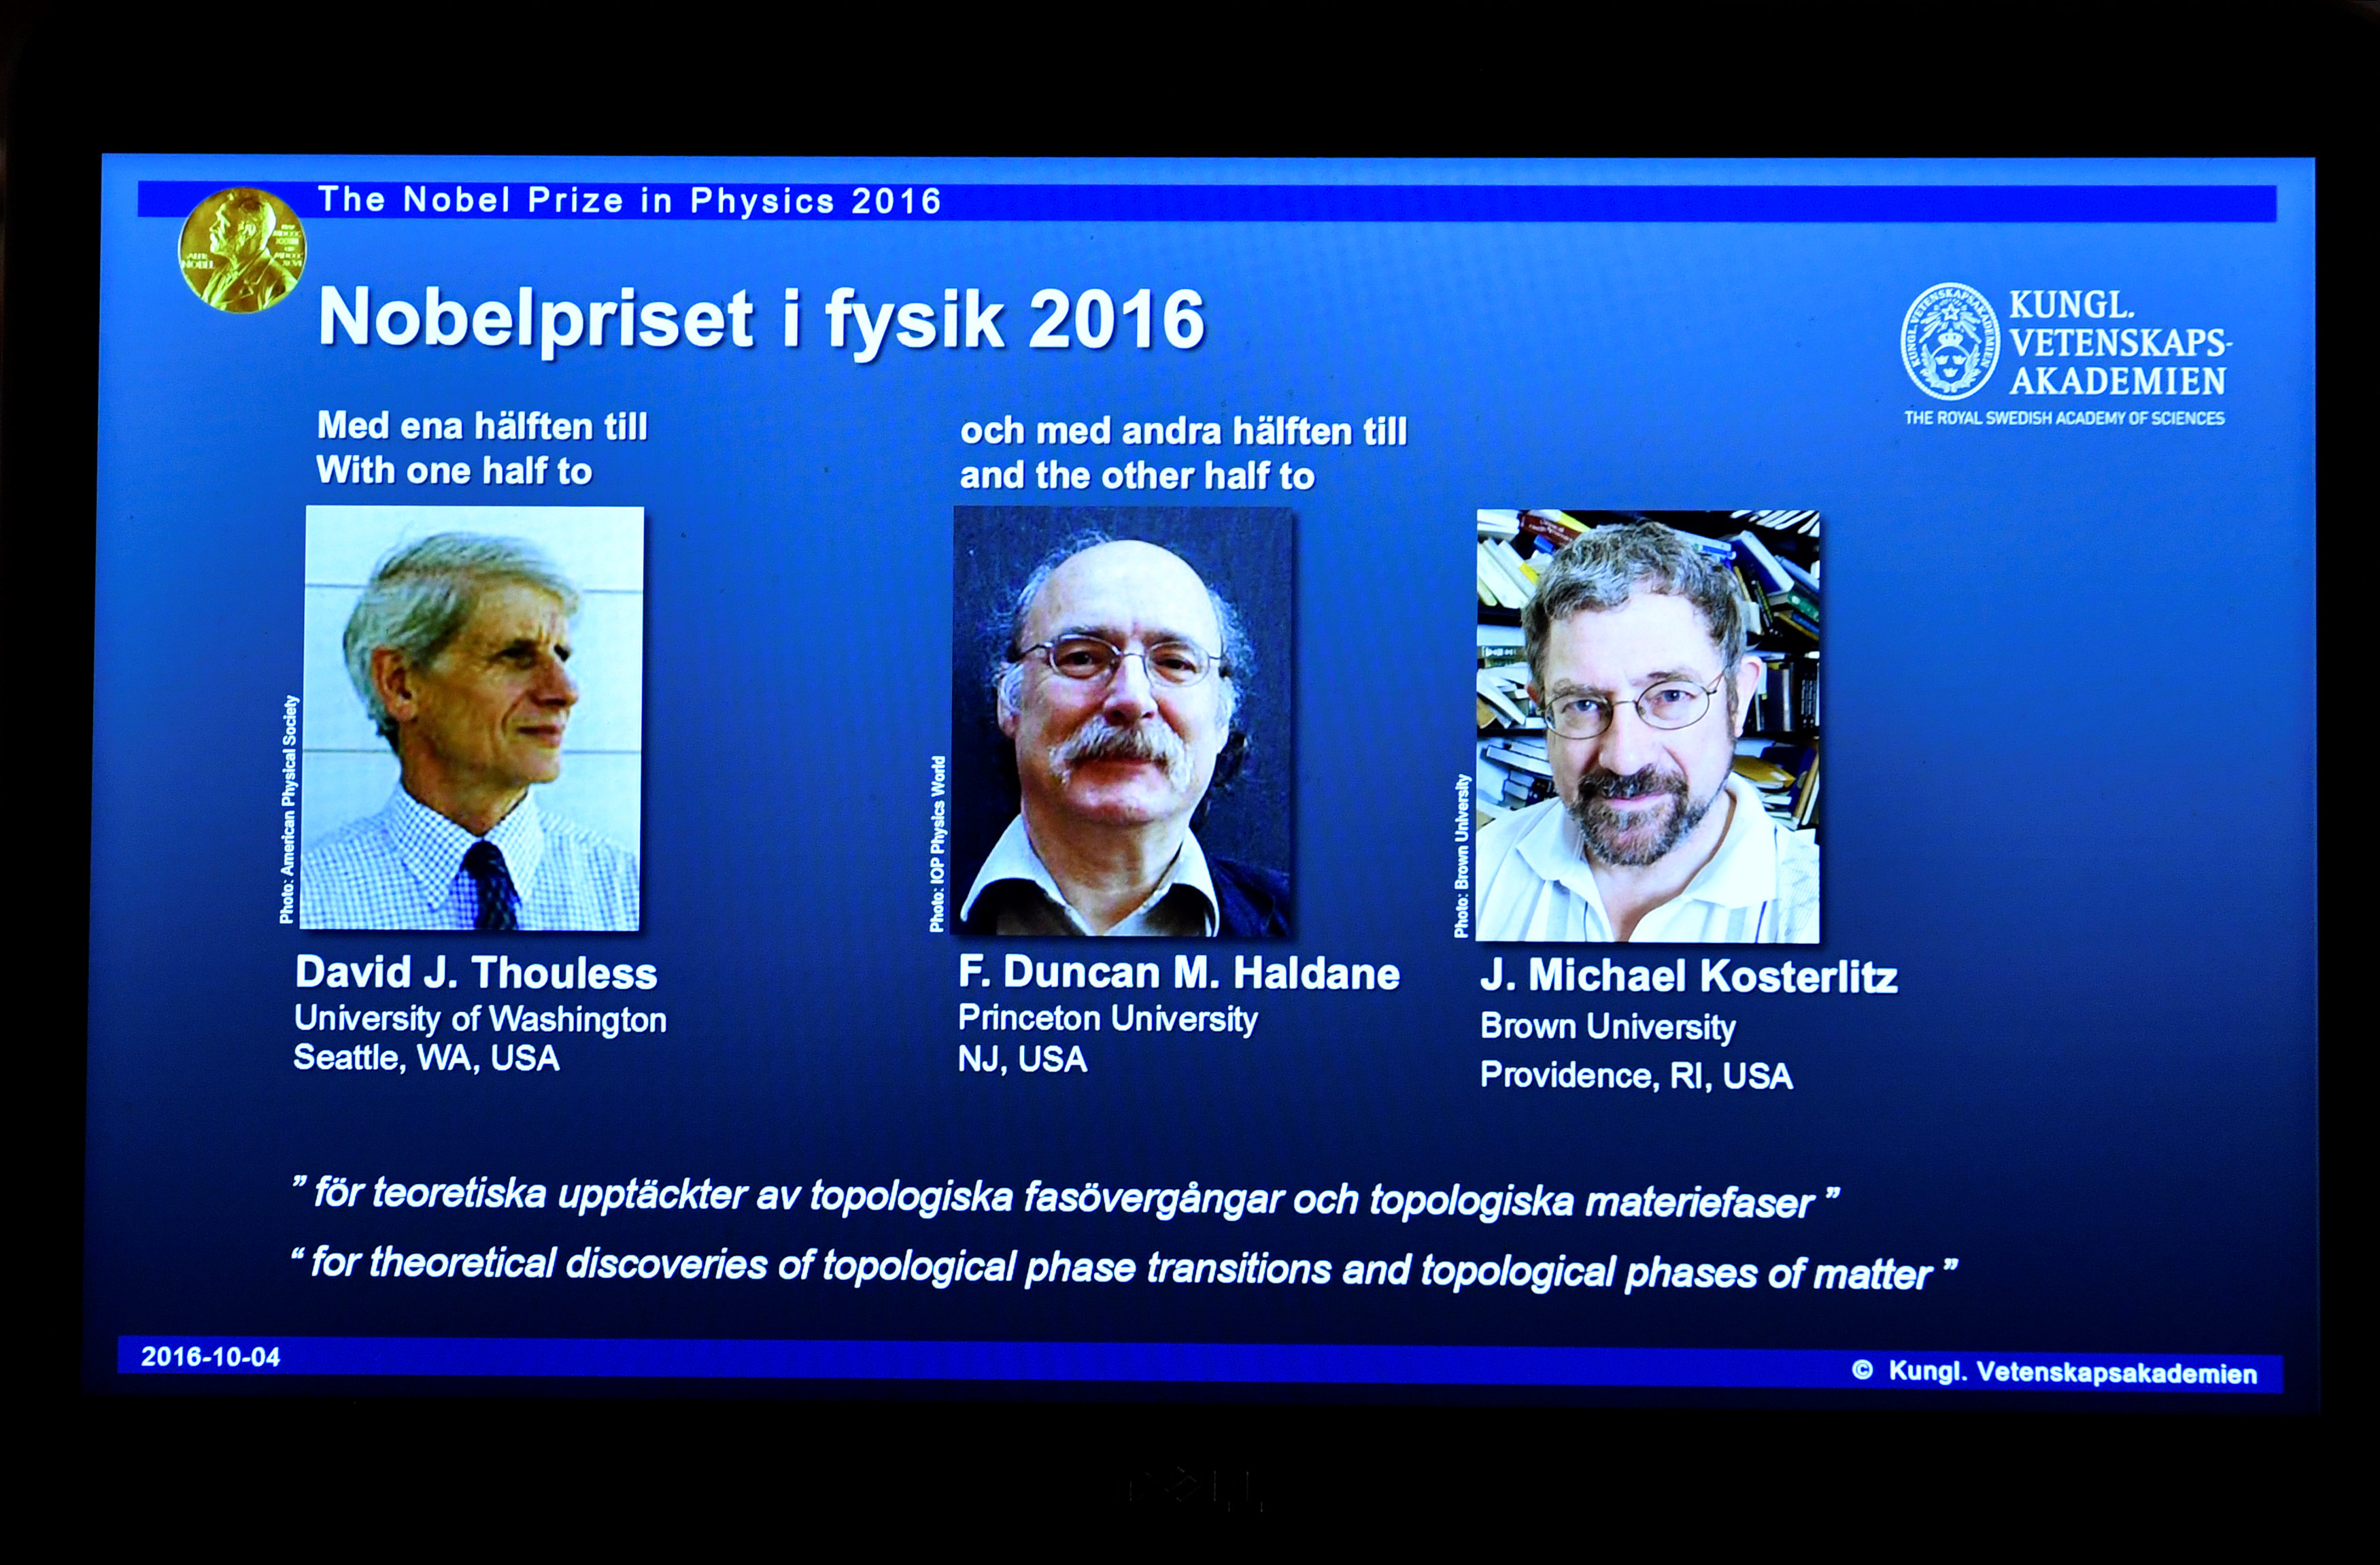 British-born scientists win 2016 Nobel physics prize